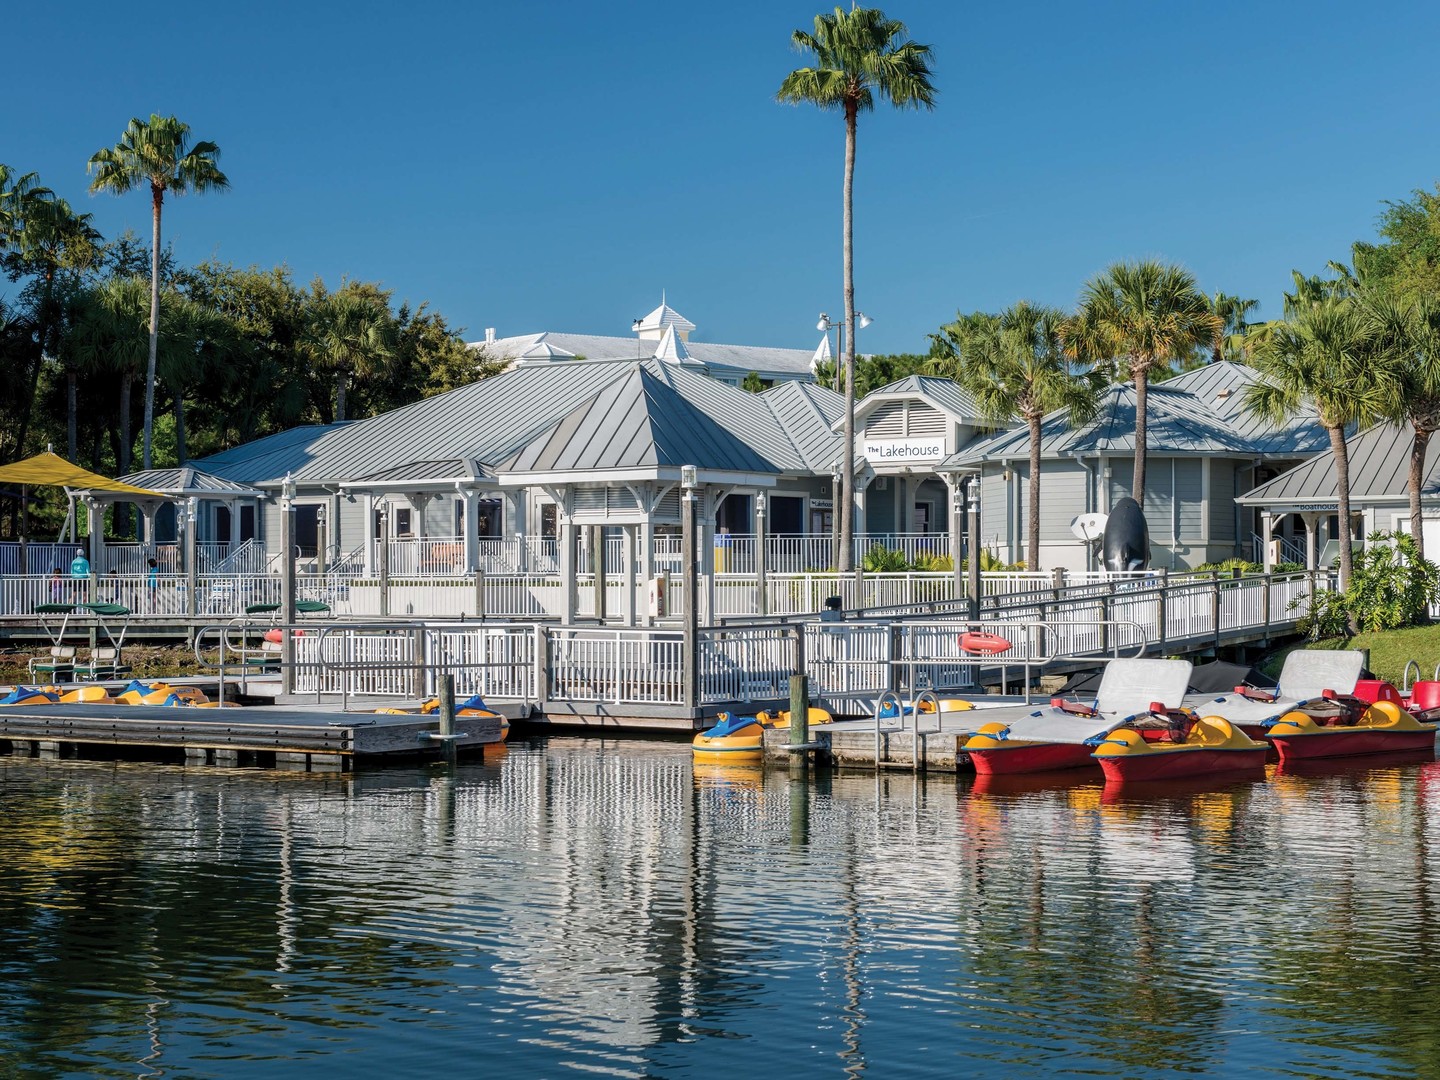 Marriott's Cypress Harbour Activities Center. Marriott's Cypress Harbour is located in Orlando, Florida United States.